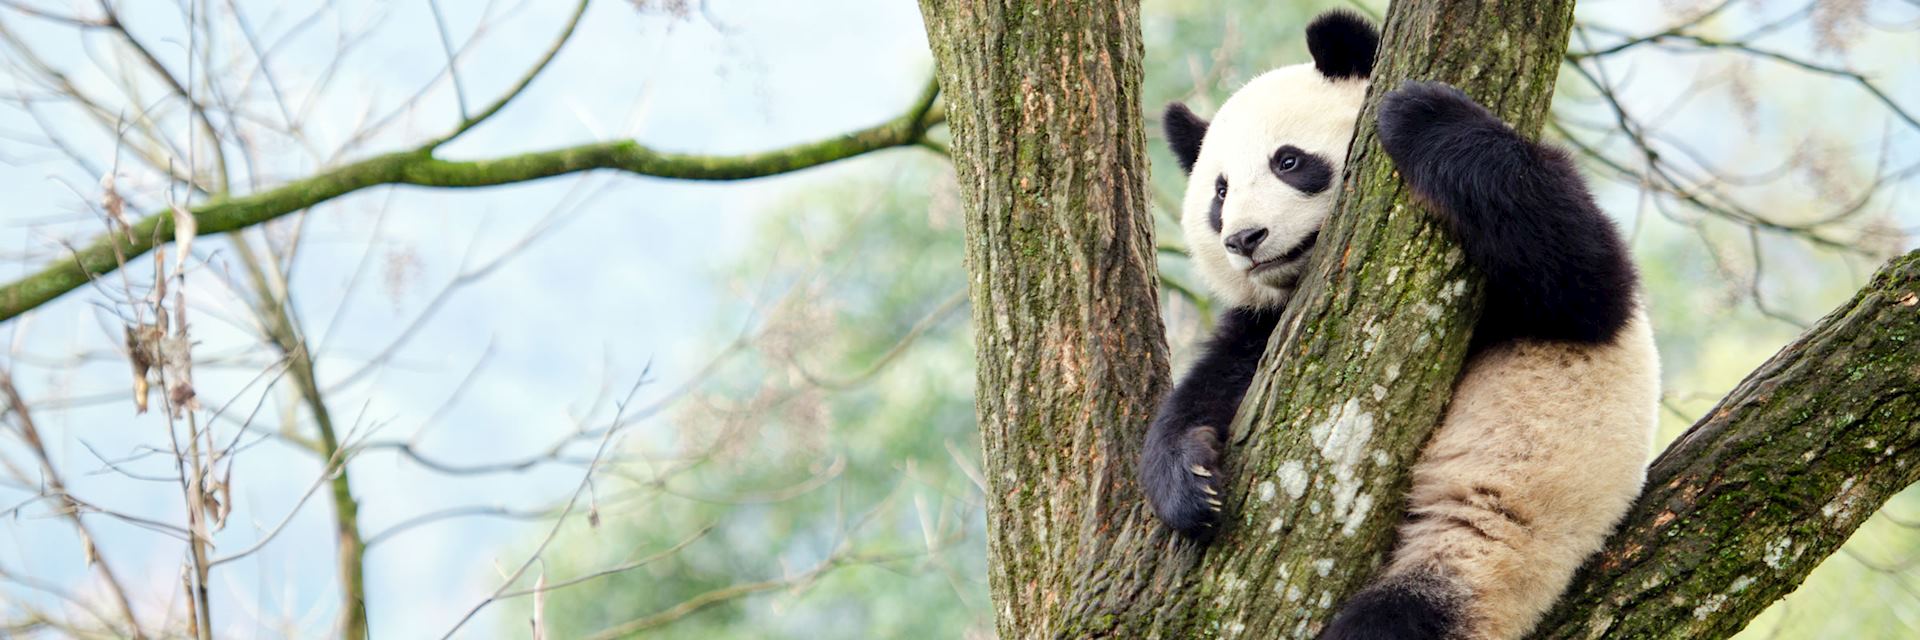 Giant panda, Chengdu